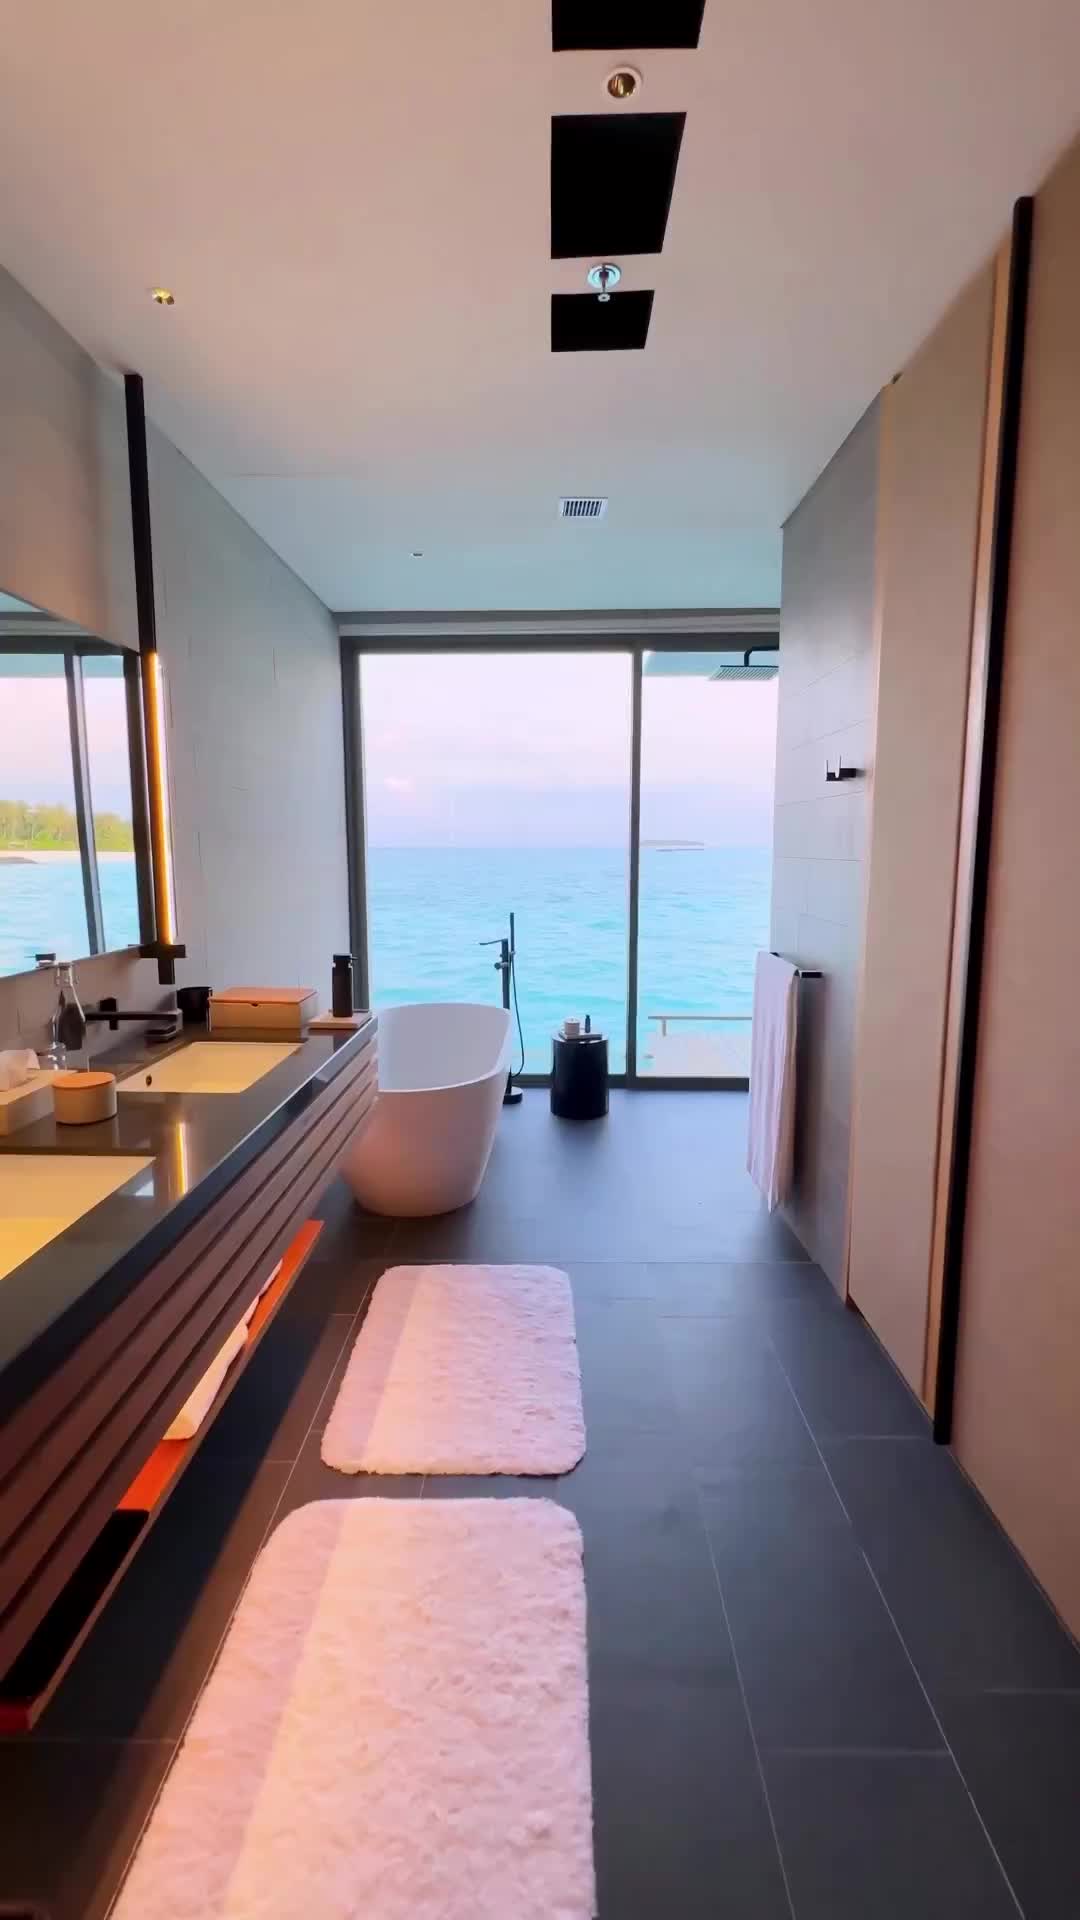 Luxurious Bathroom Goals at Alila Maldives Resort